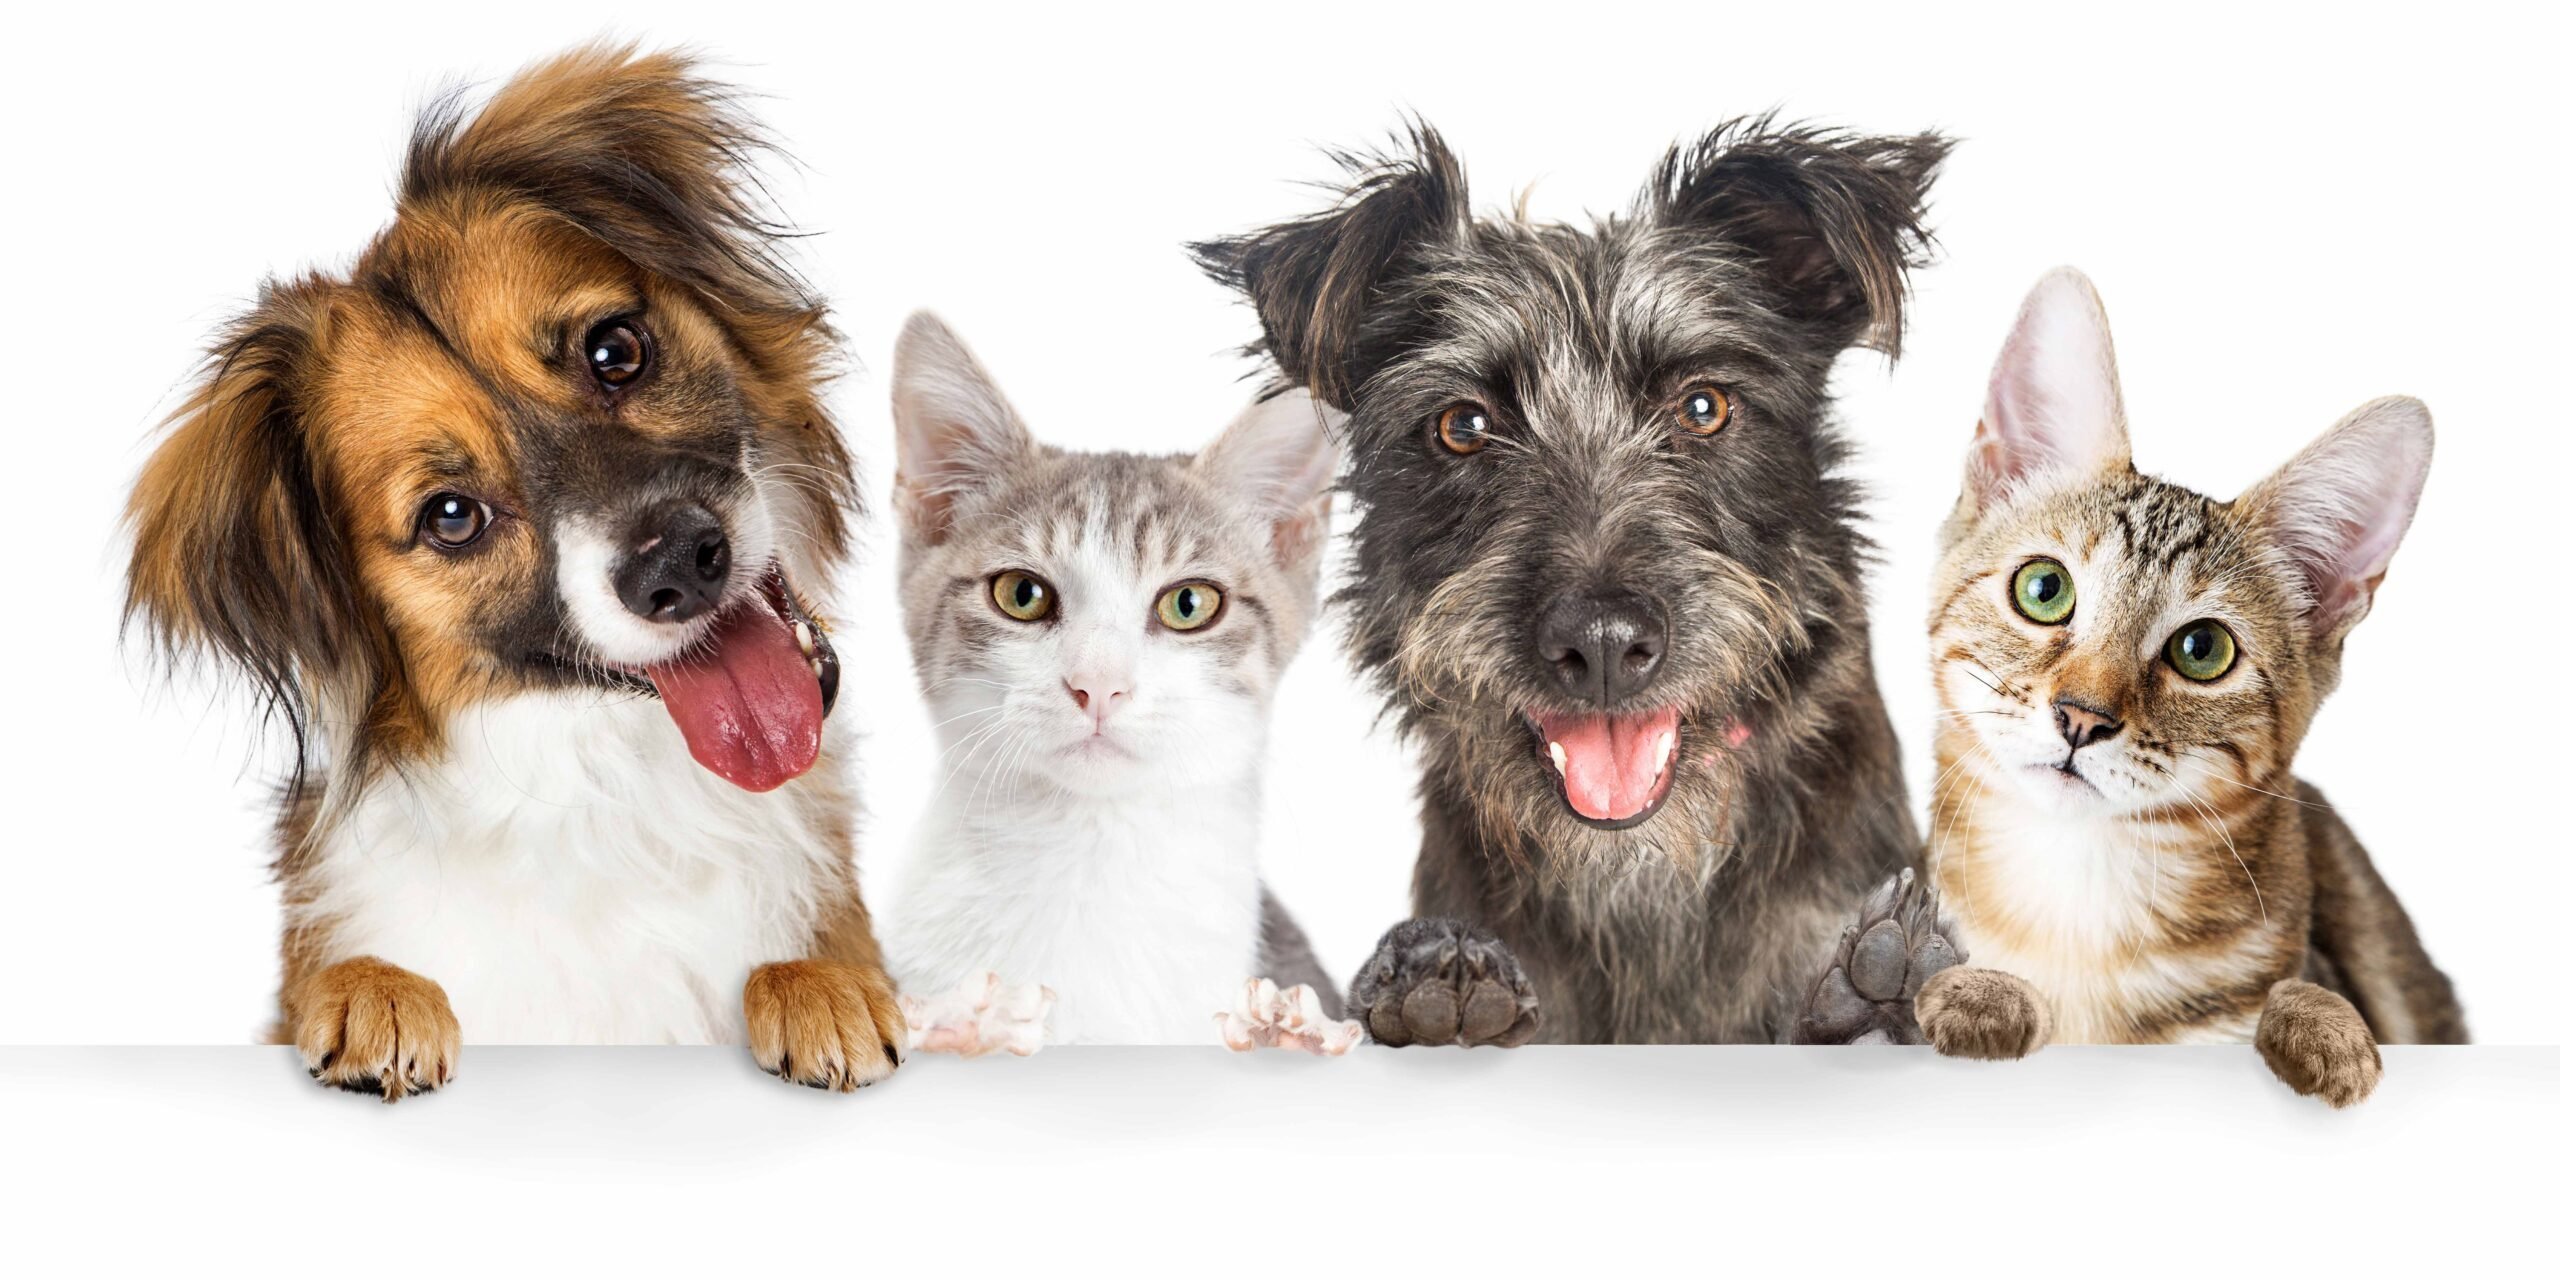 Животные породы кошек и собак. Собачки и кошечки. Картинки кошек и собак. Зоомагазин животные. Собака и кошка вместе.